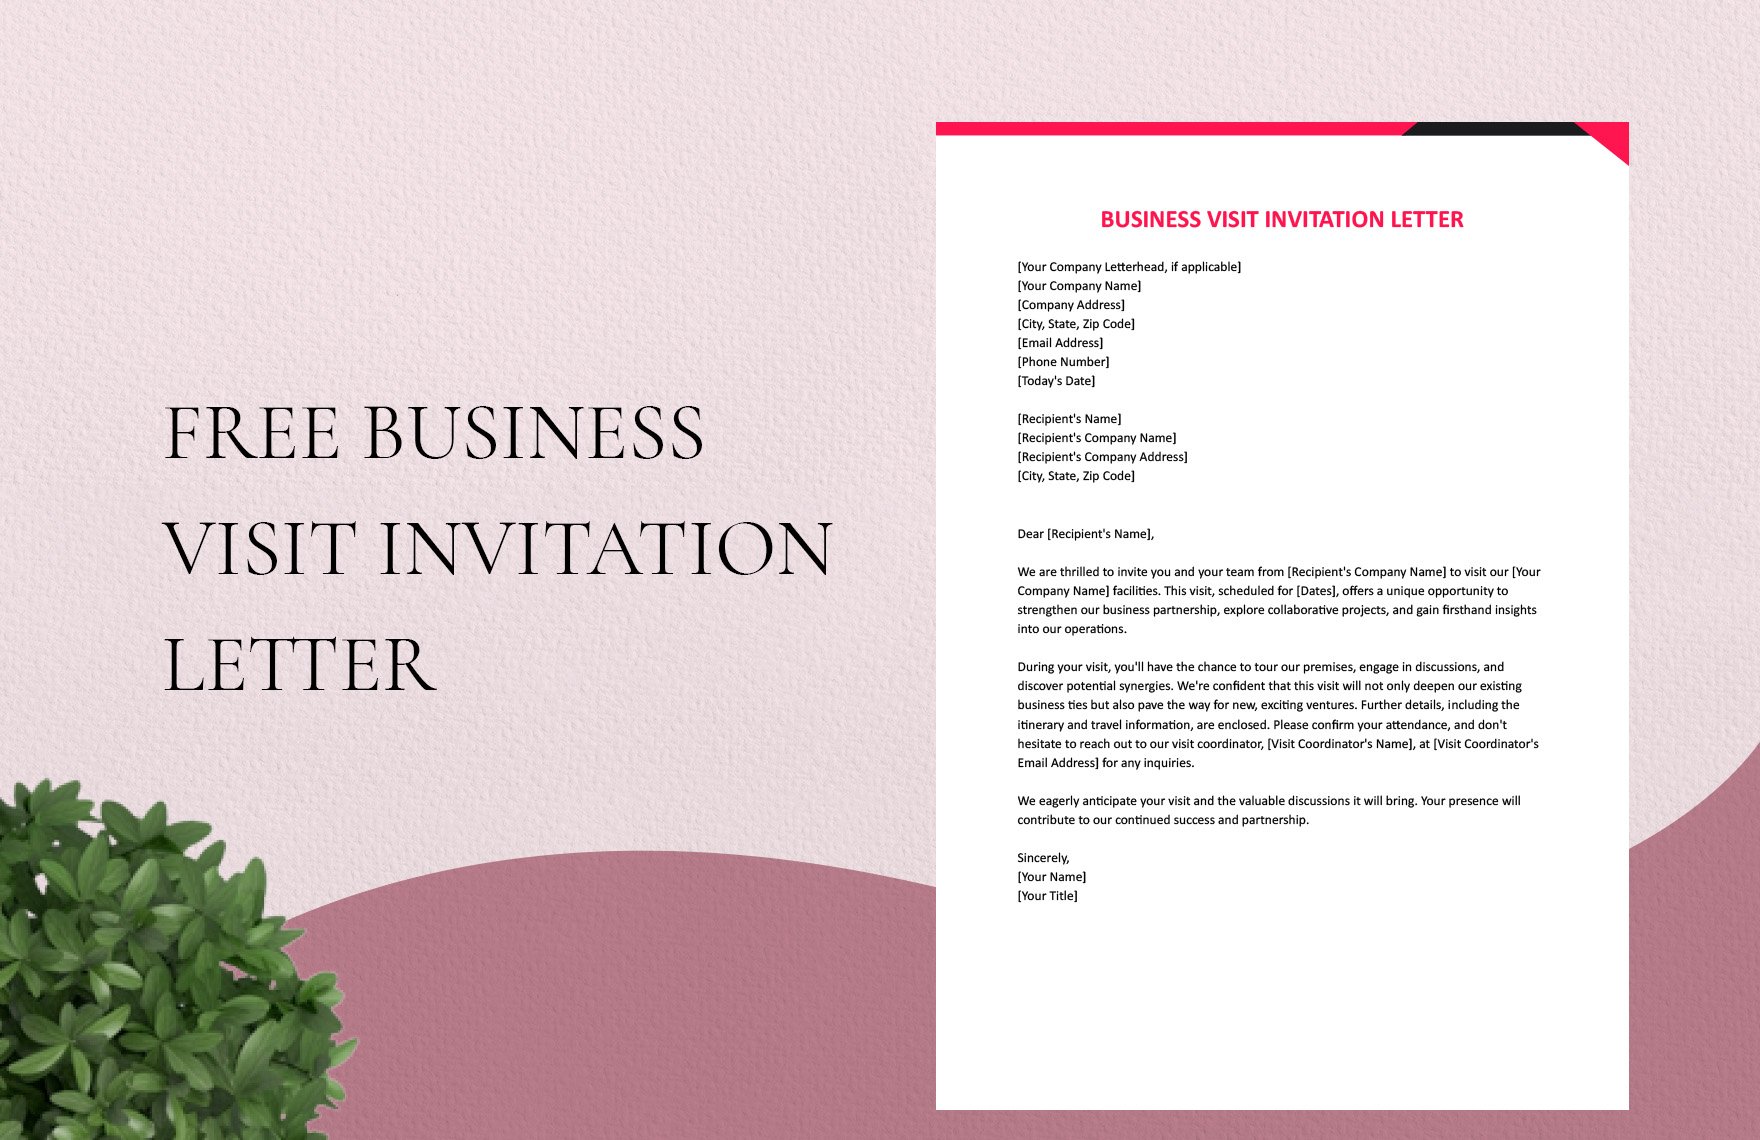 Business Visit Invitation Letter